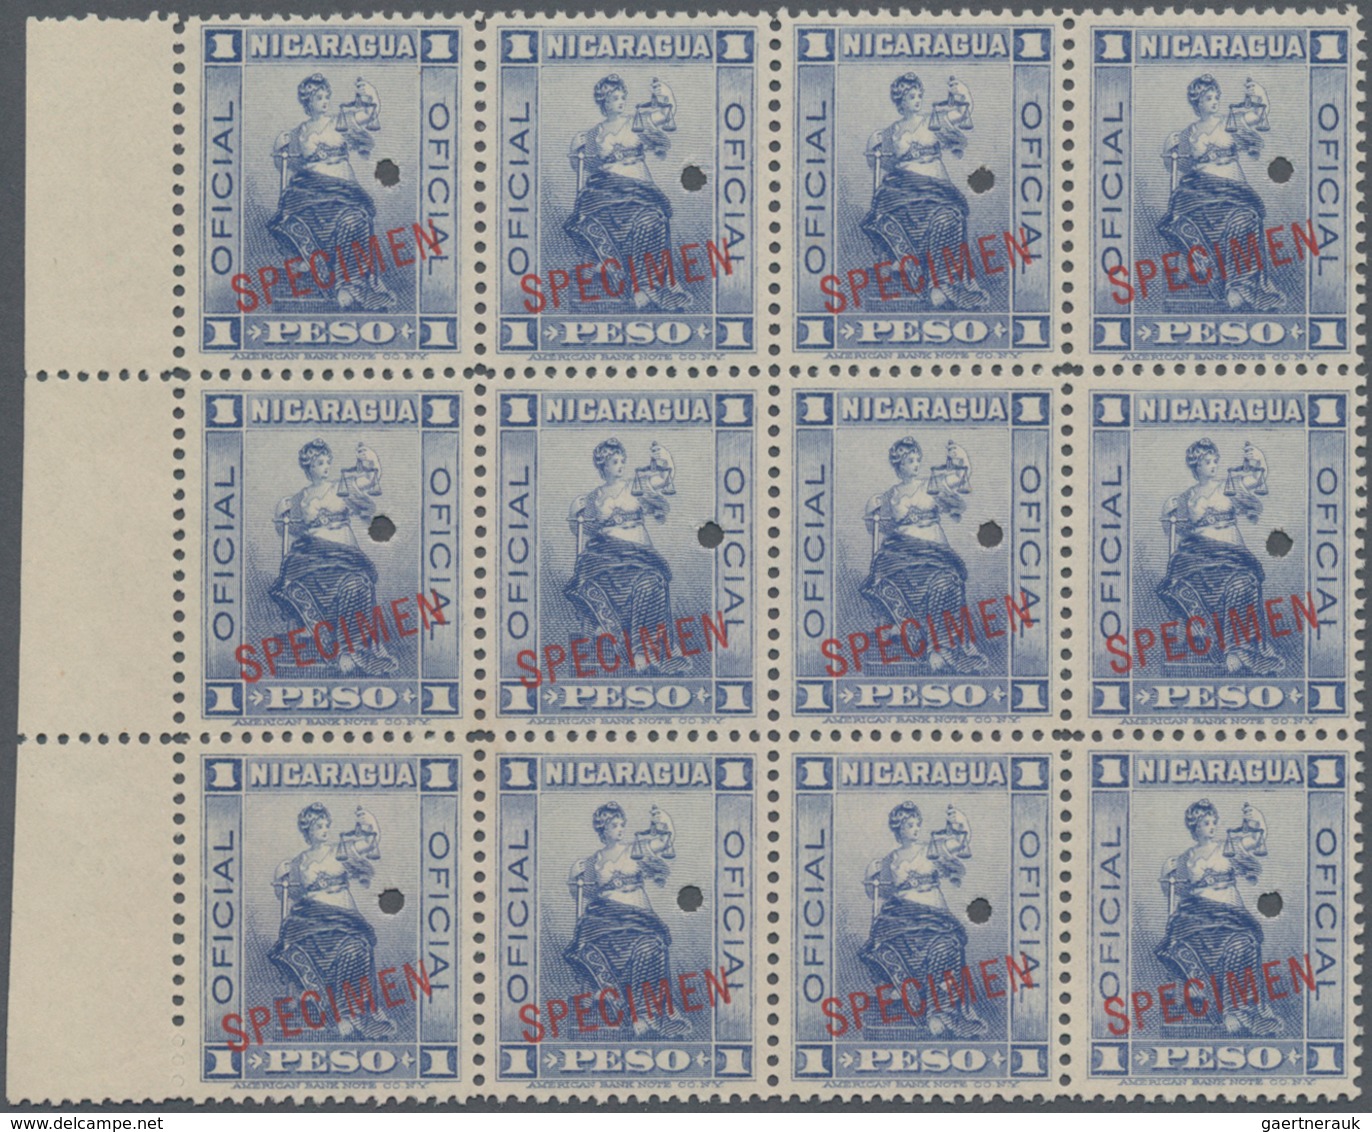 Thematik: Justiz / Justice: 1900, NICARAGUA: Official Stamp Issue 1peso Ultramarine 'Justice' Block - Polizei - Gendarmerie